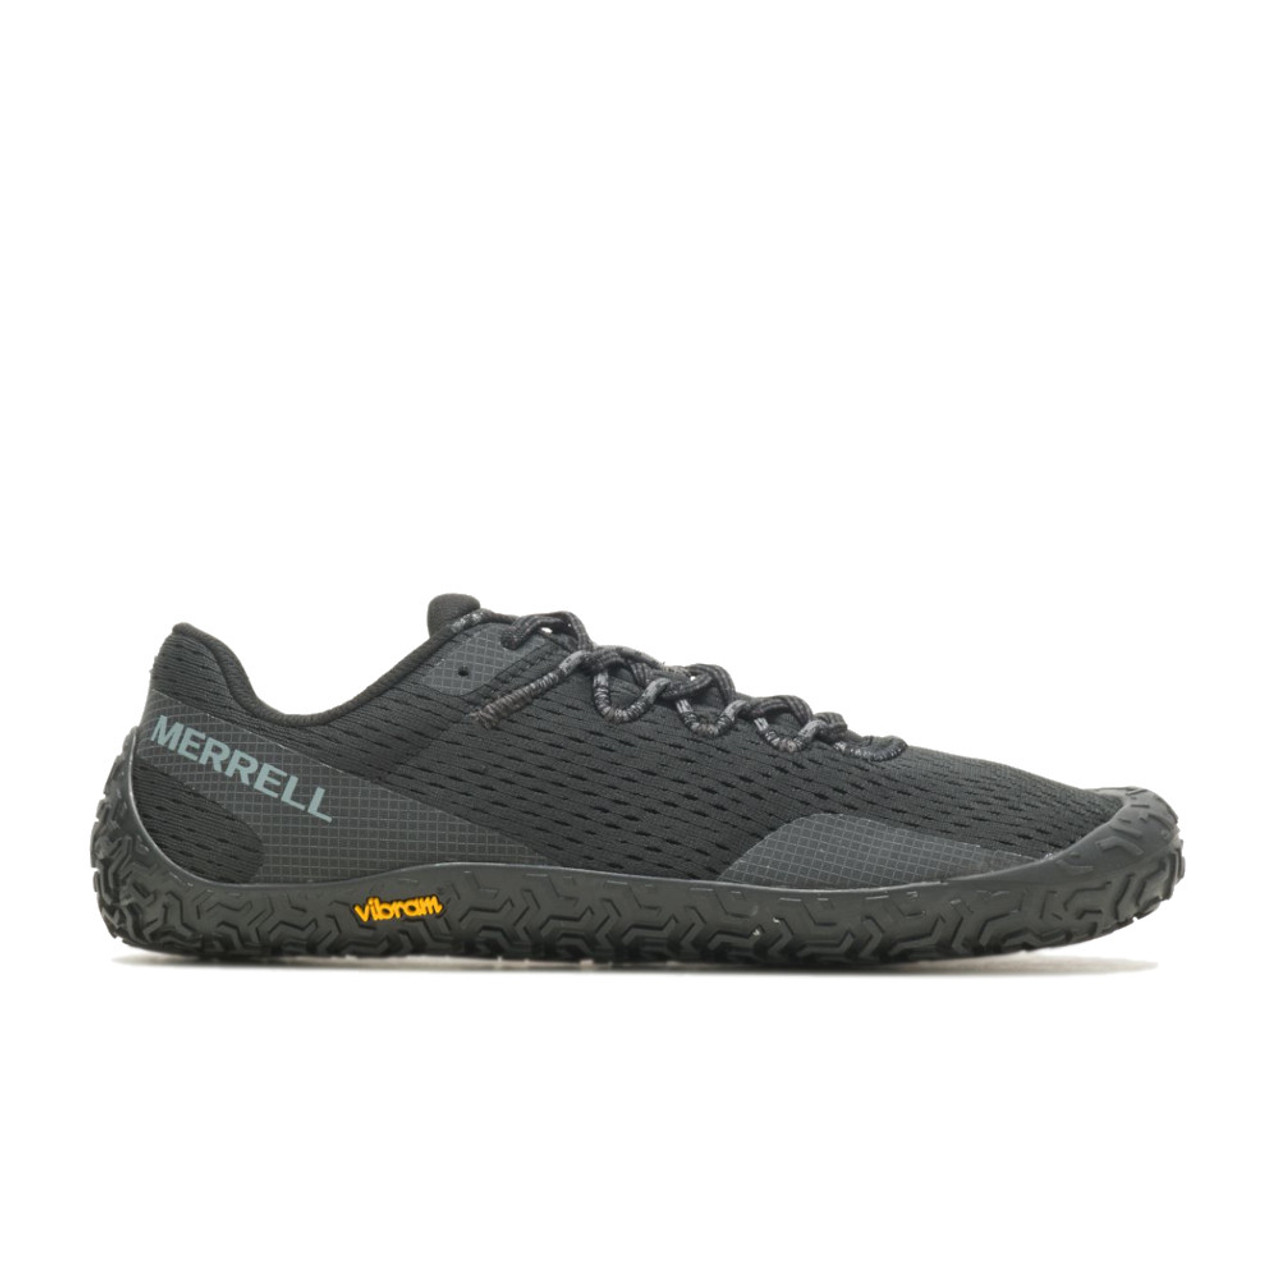 MERRELL Men's Vapor Glove 6 Trail Runnning Shoes - Free Shipping